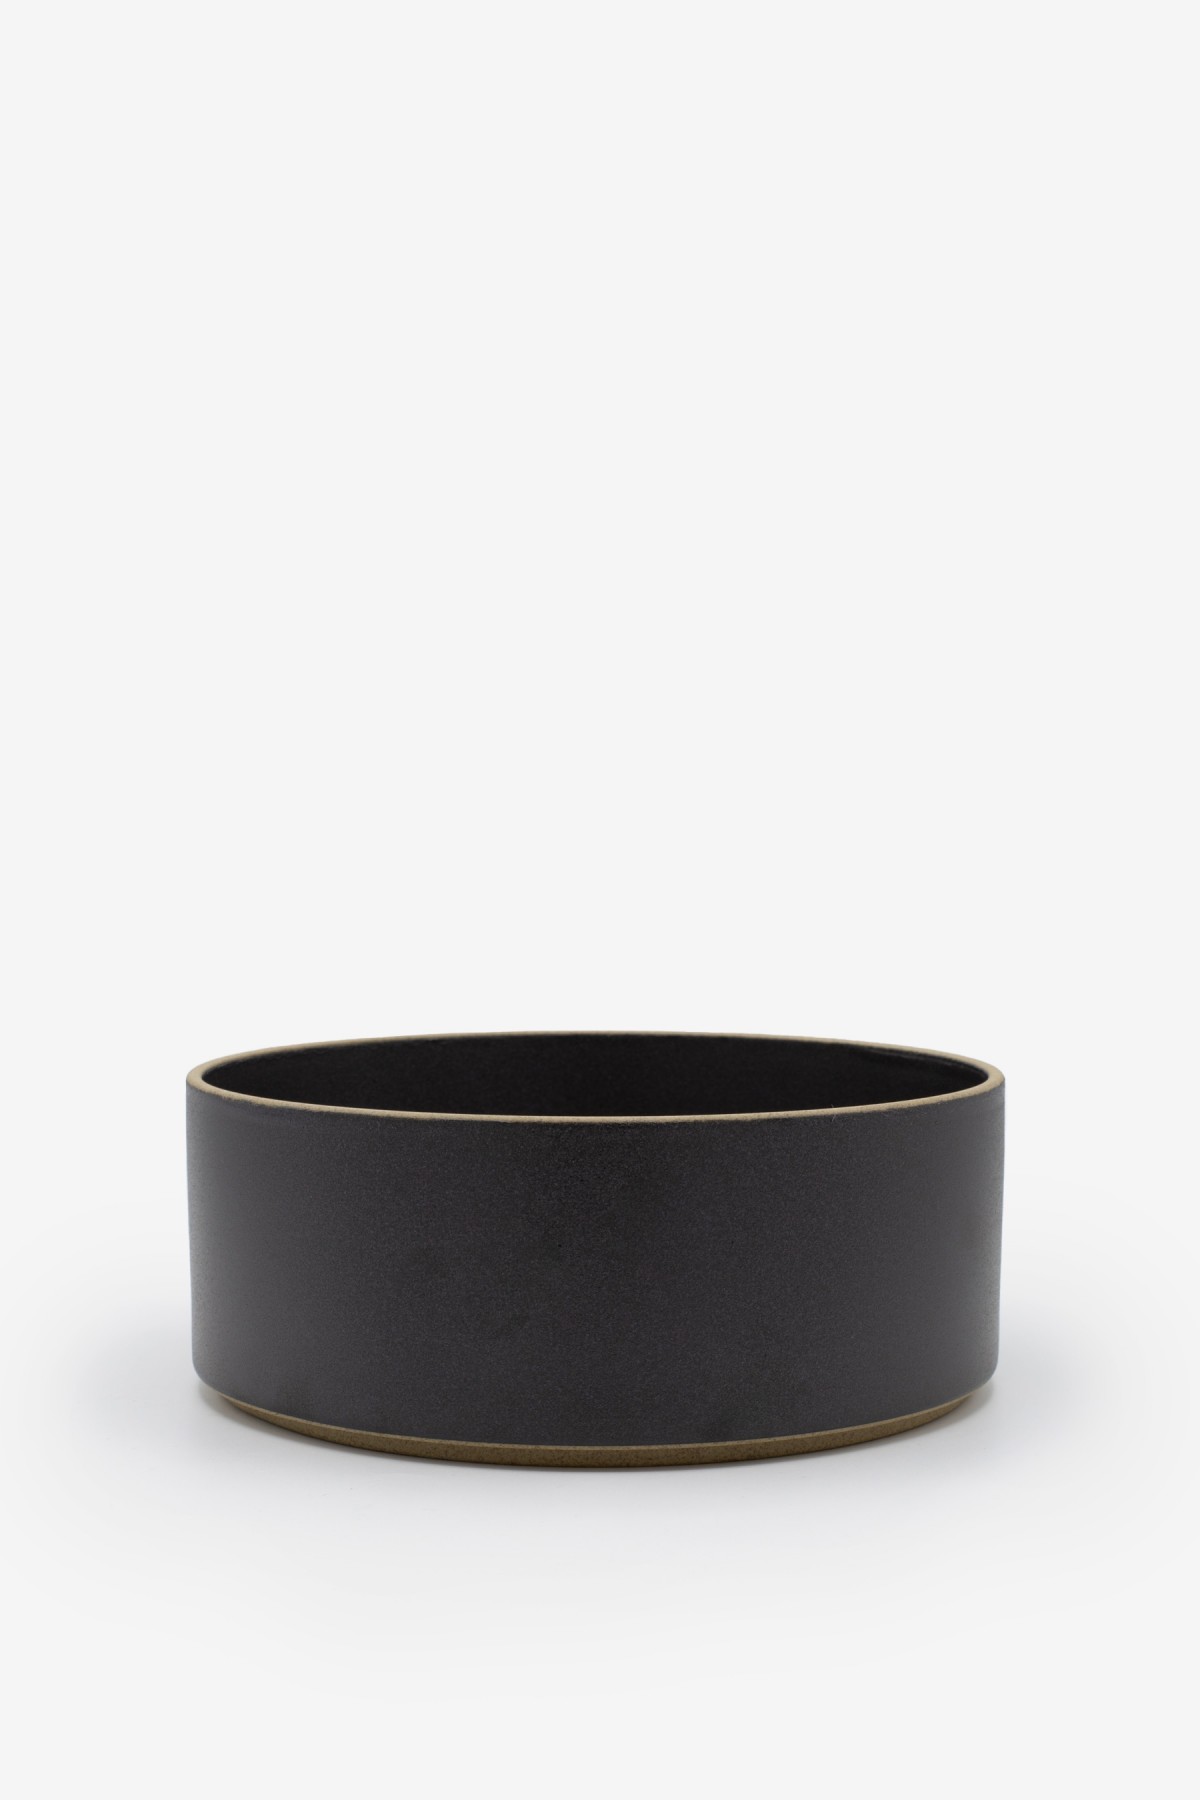 Hasami Porcelain Bowl 185x72 in Black